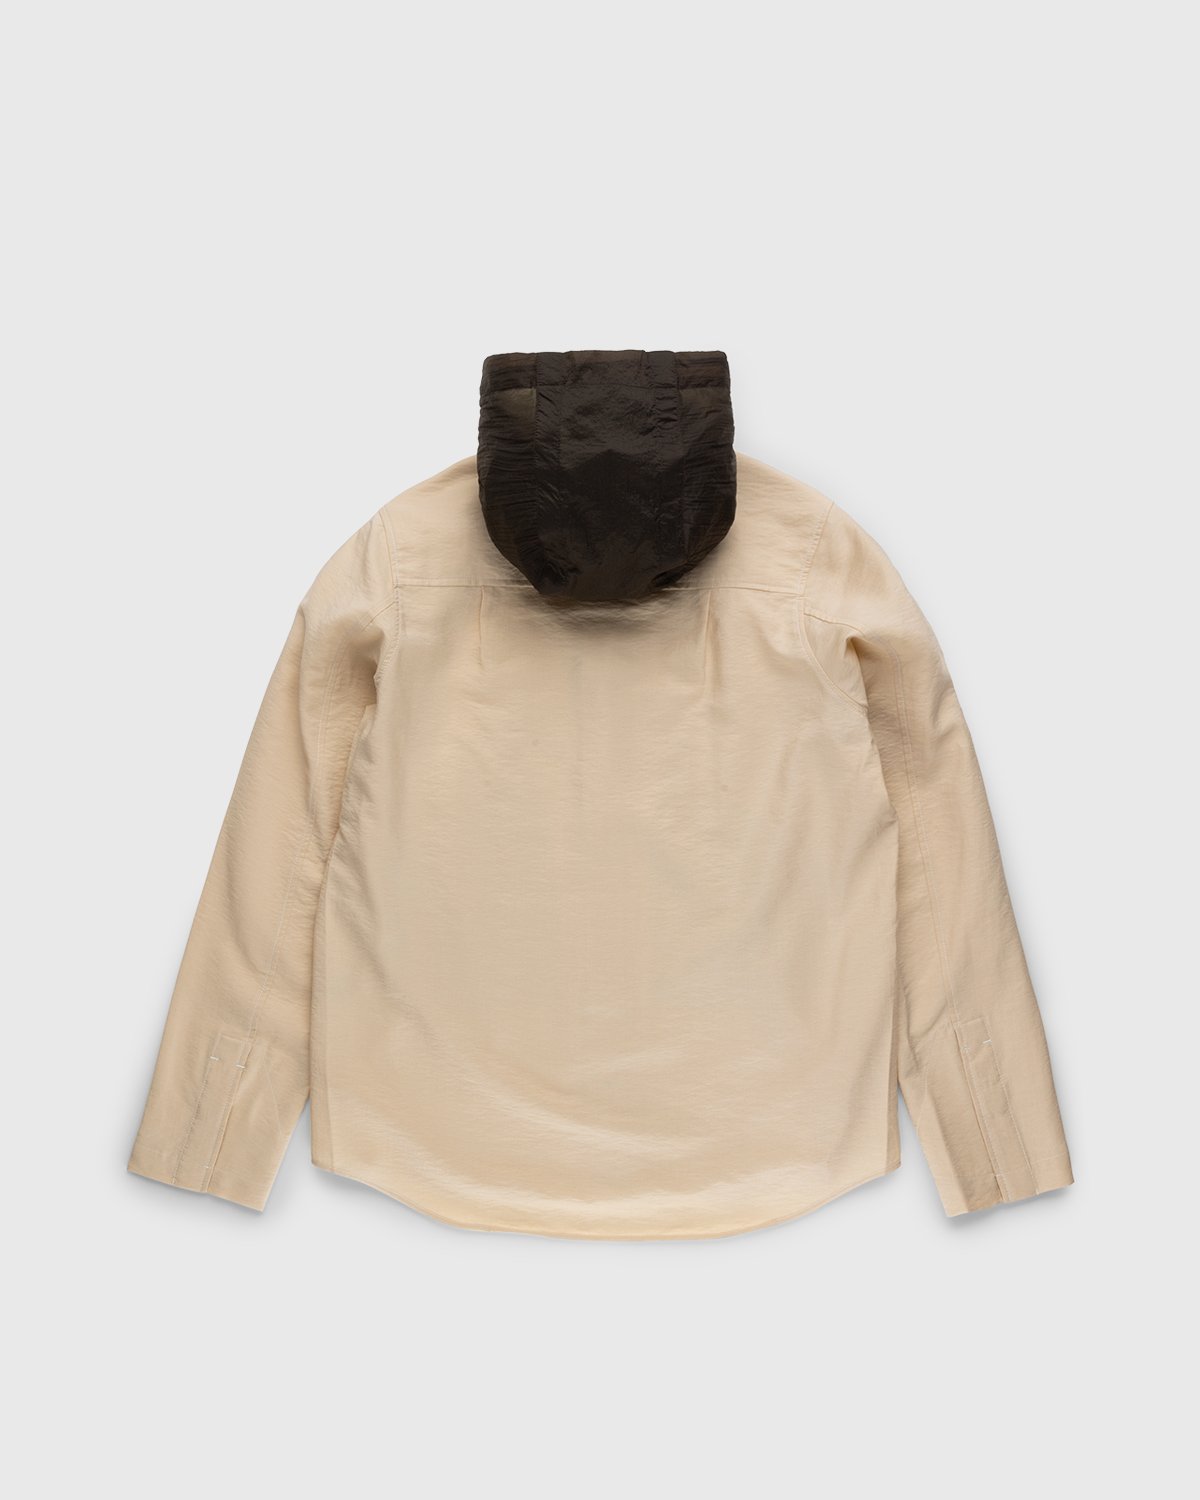 Arnar Mar Jonsson - Solarlag Hooded Shirt Melon/Chocolate - Clothing - Beige - Image 2